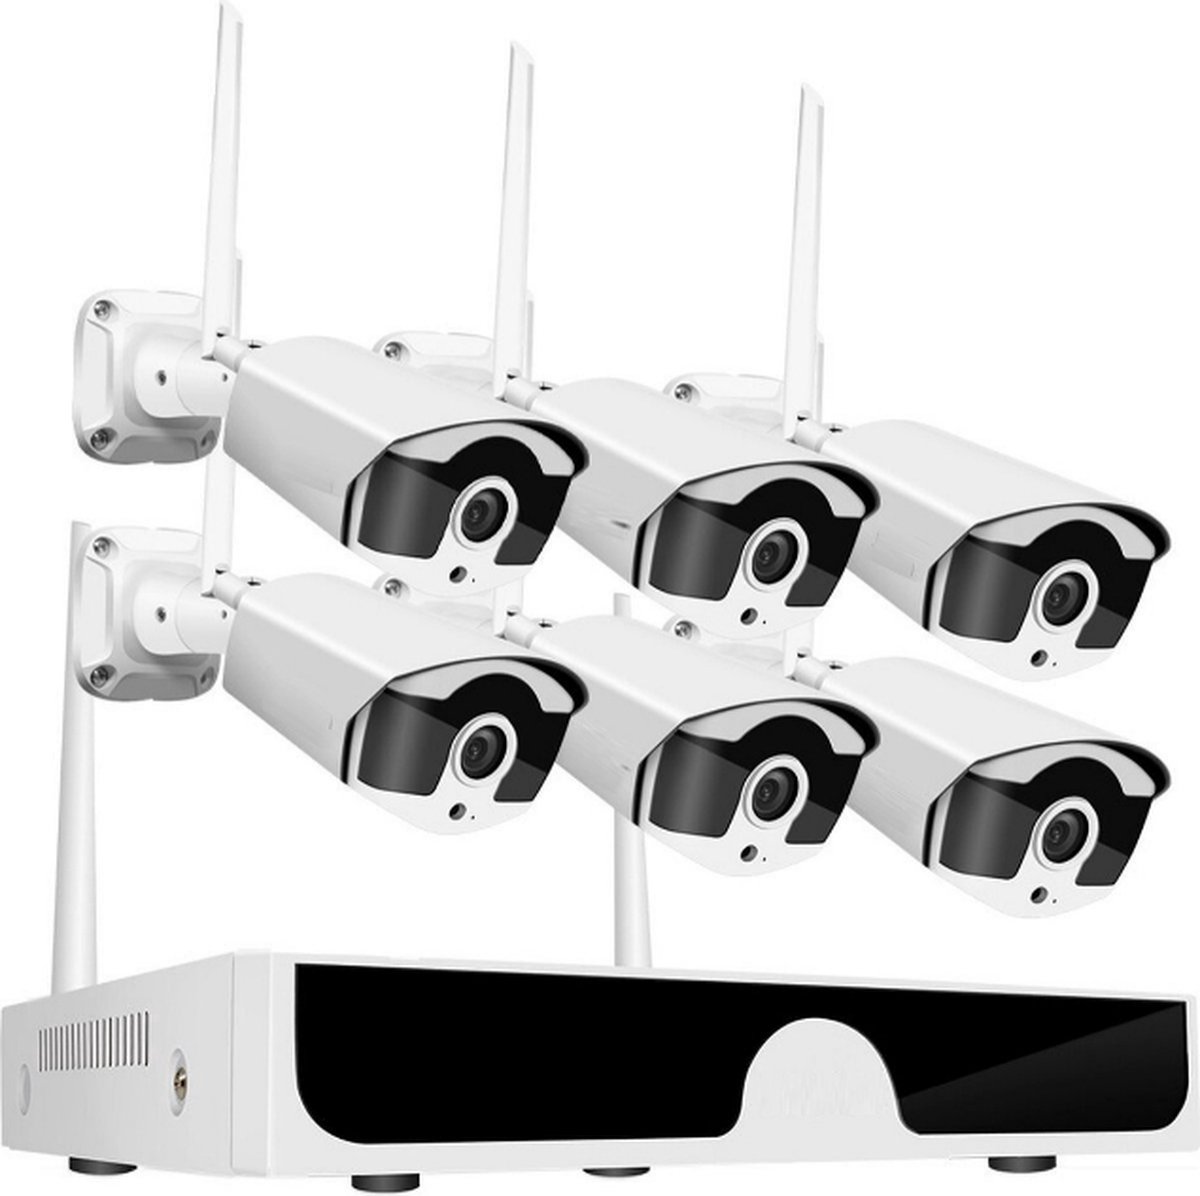 Velox CCTV - Beveiligingscamera set met 6 Cameras Outdoor Buiten - Home Security Camera Systeem - Wifi Camera Set - Video + Audio-opname - Beveiligingscamera - 6 Camera’s - Nachtzicht - Motion Detector